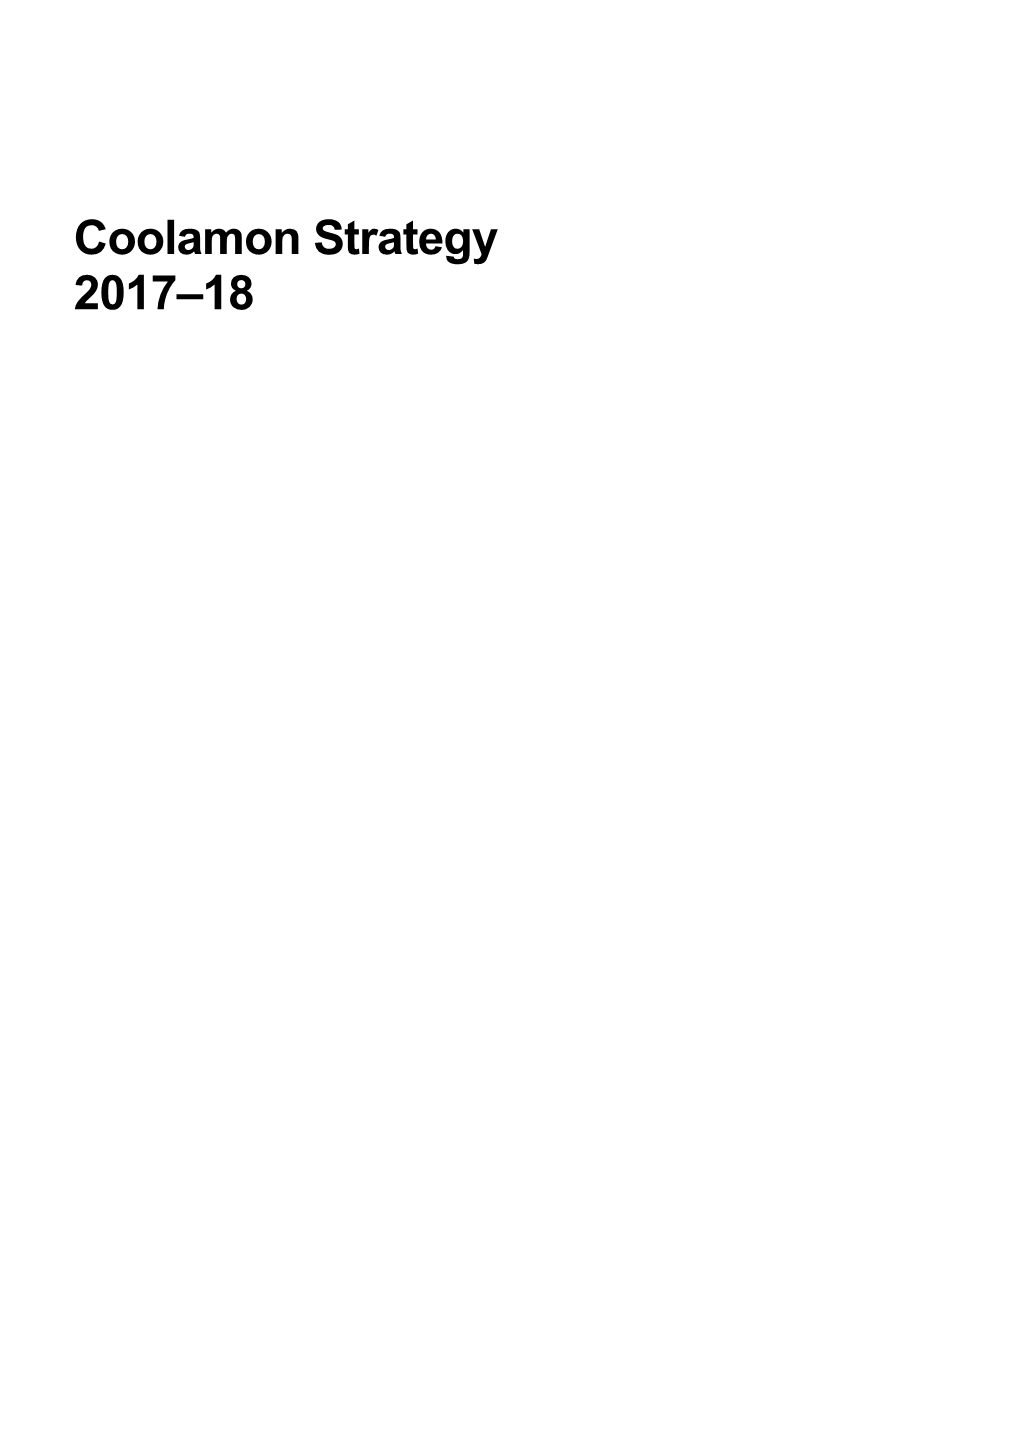 Coolamon Strategy 2017 18